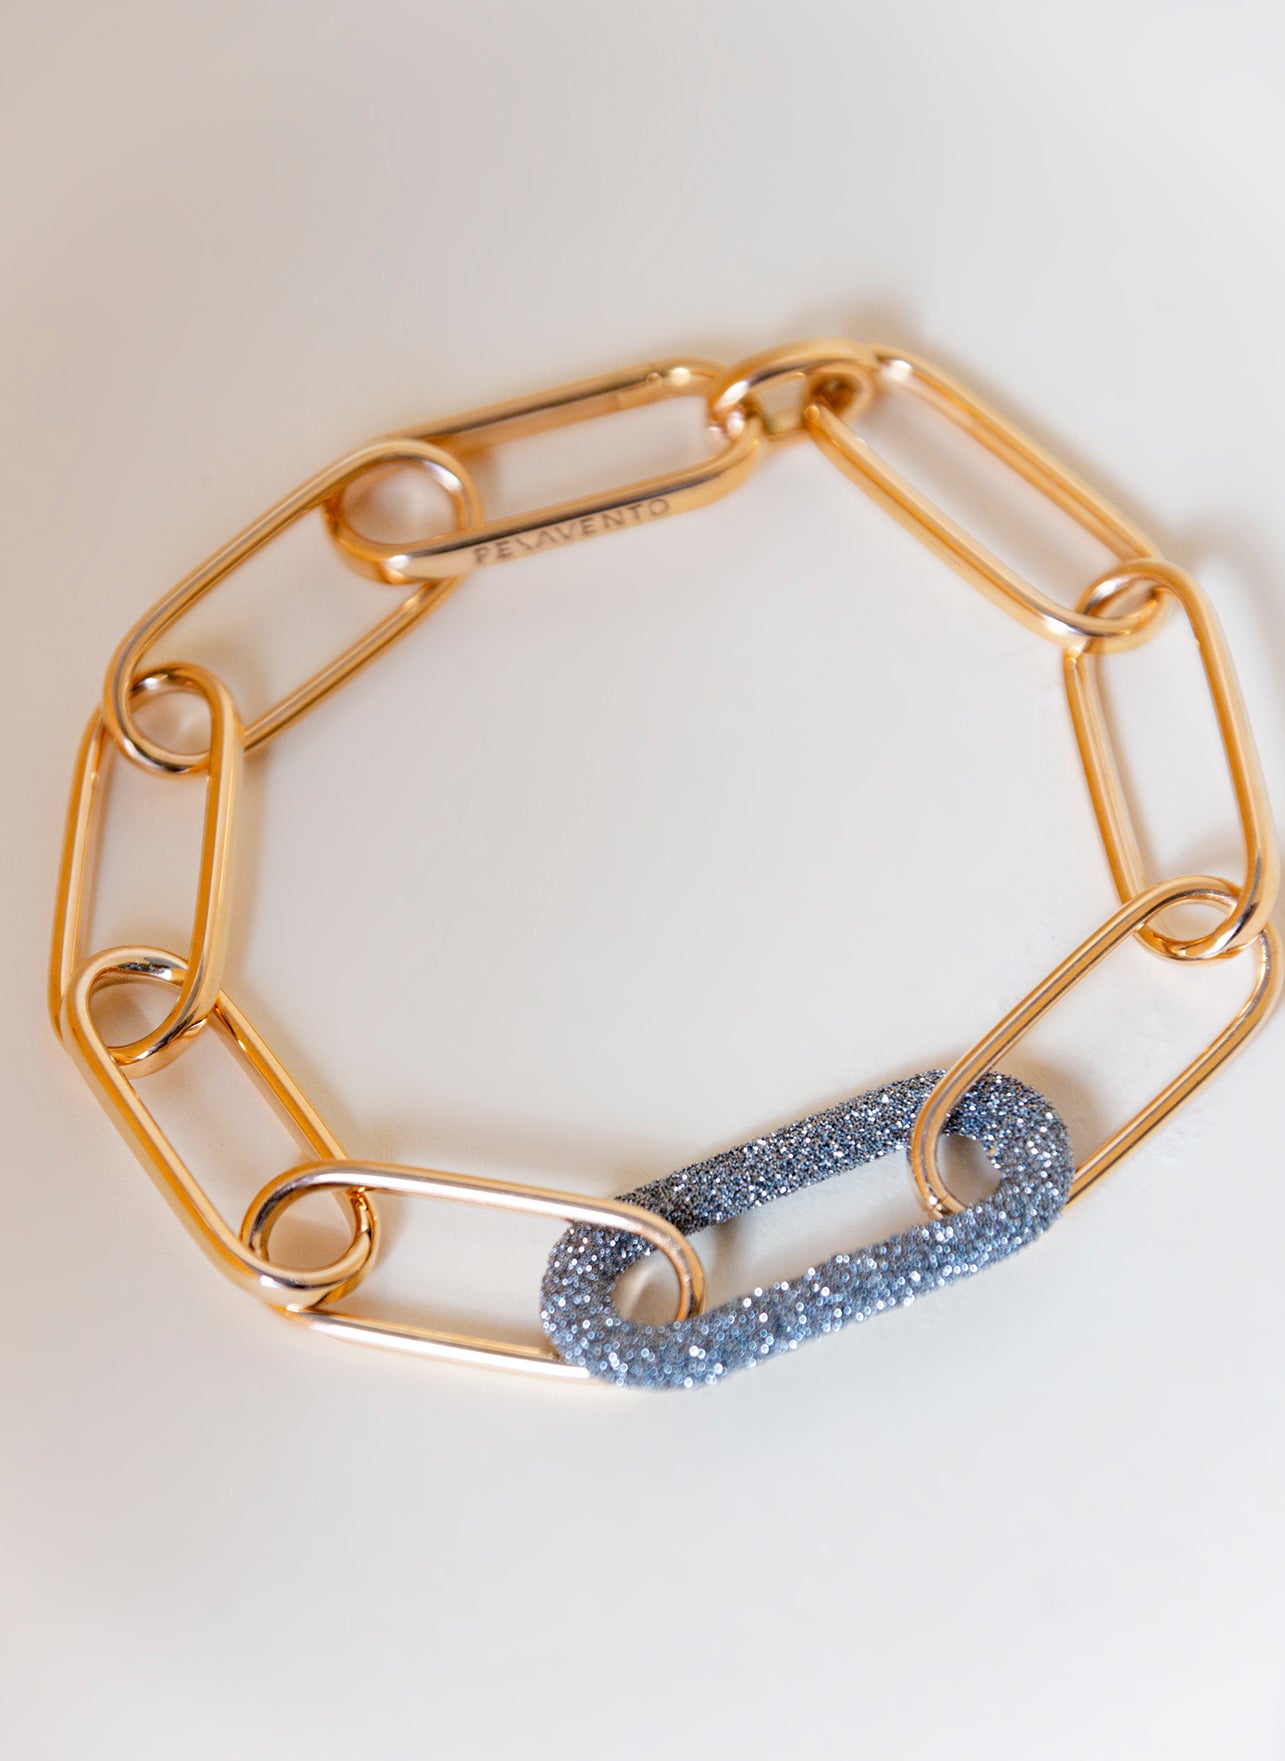 Gold Link Bracelet and Diamond Dust